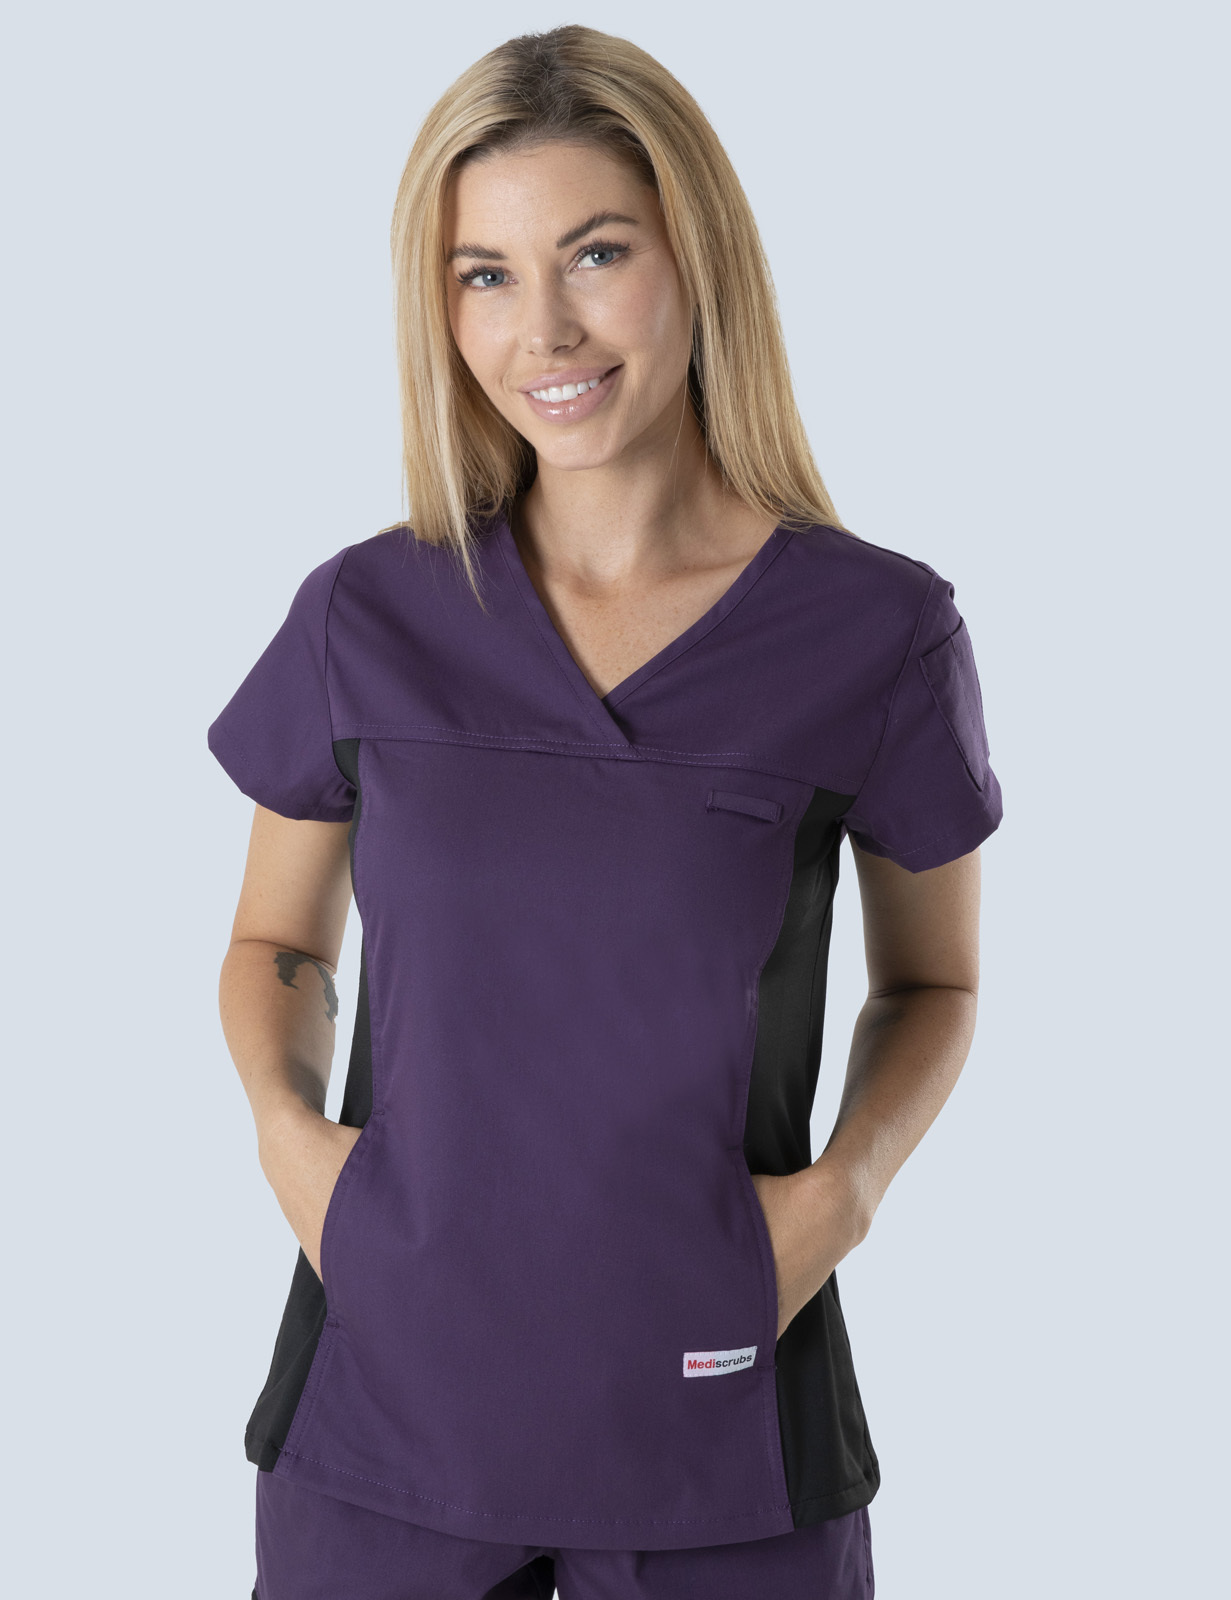 Northern Hospital - ED Nurse (Women's Fit Spandex Scrub Top in Aubergine incl Logos)